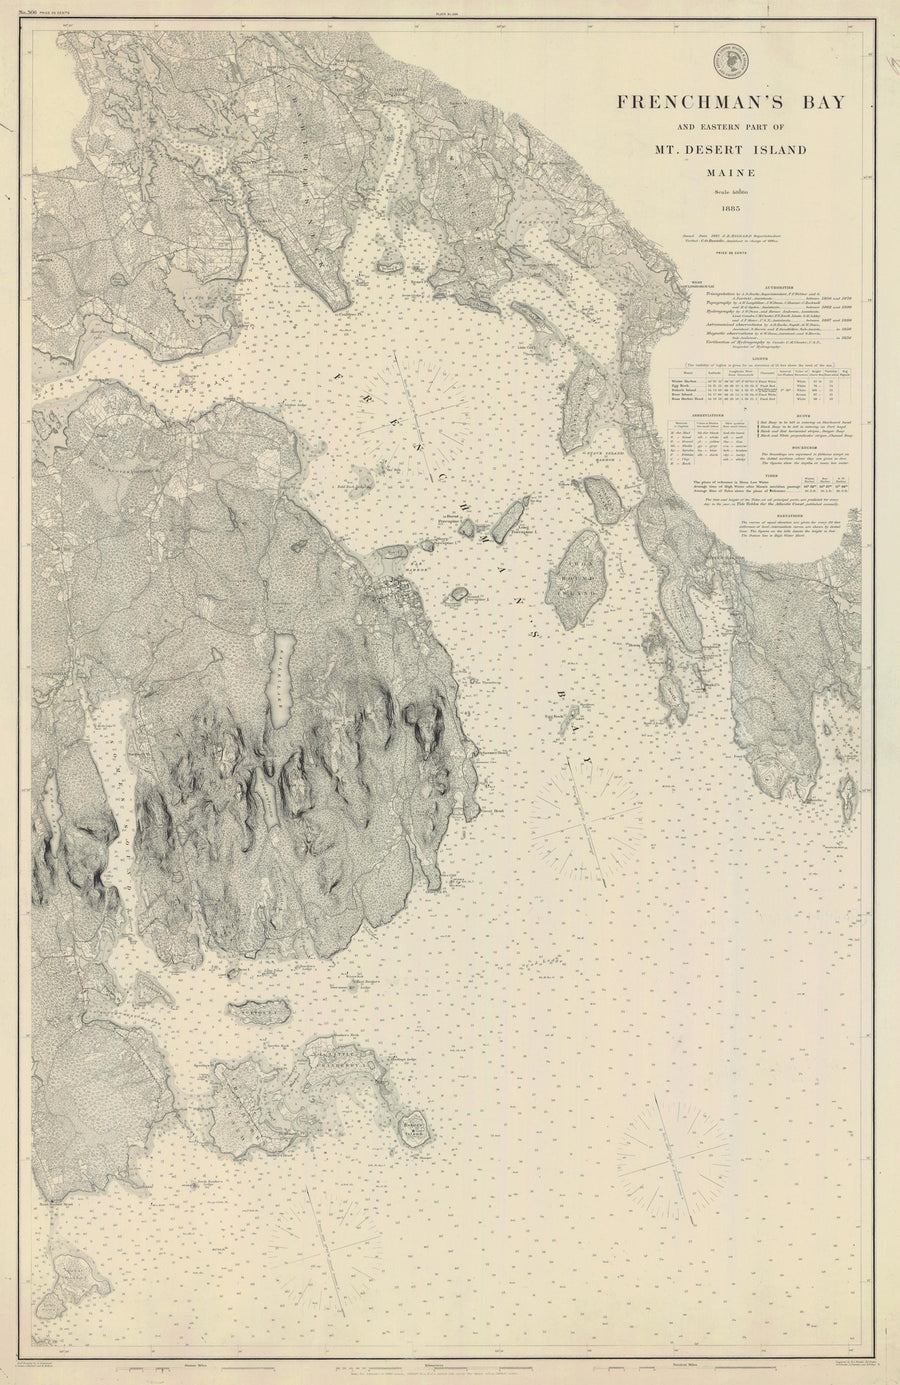 Mt. Desert Island - Frenchman's Bay Map 1885